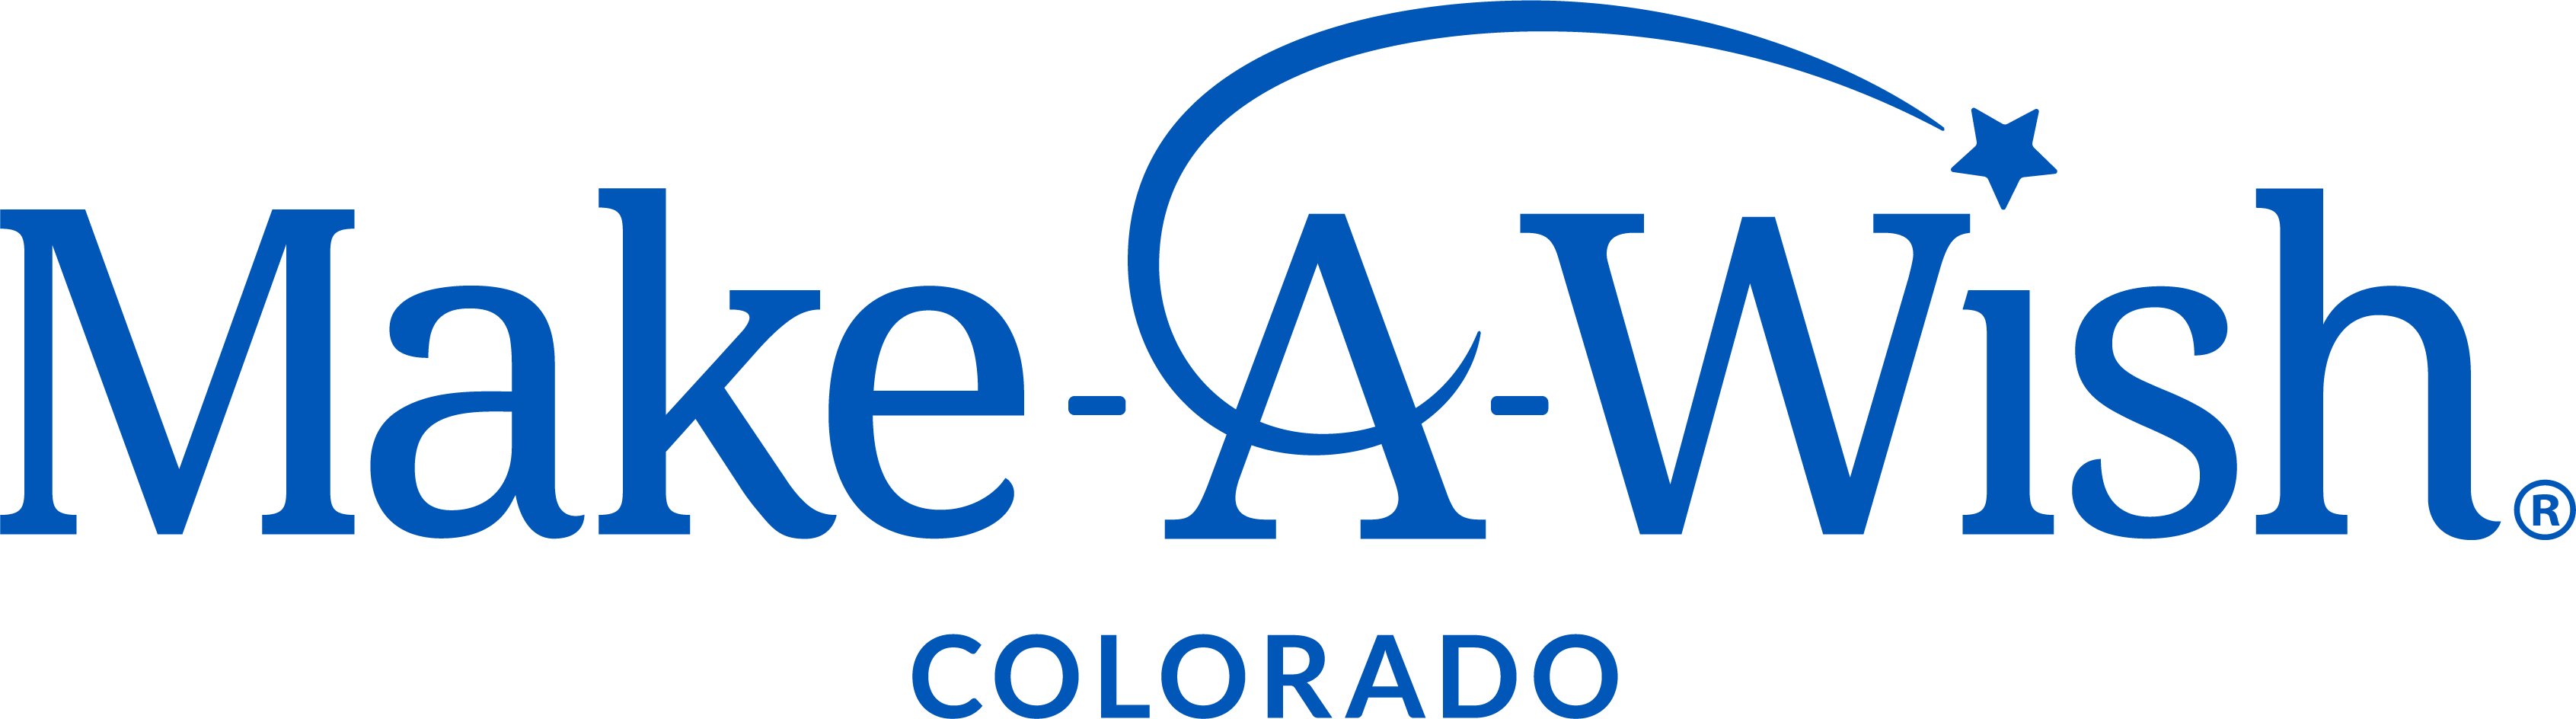 Make-A-Wish Colorado Logo